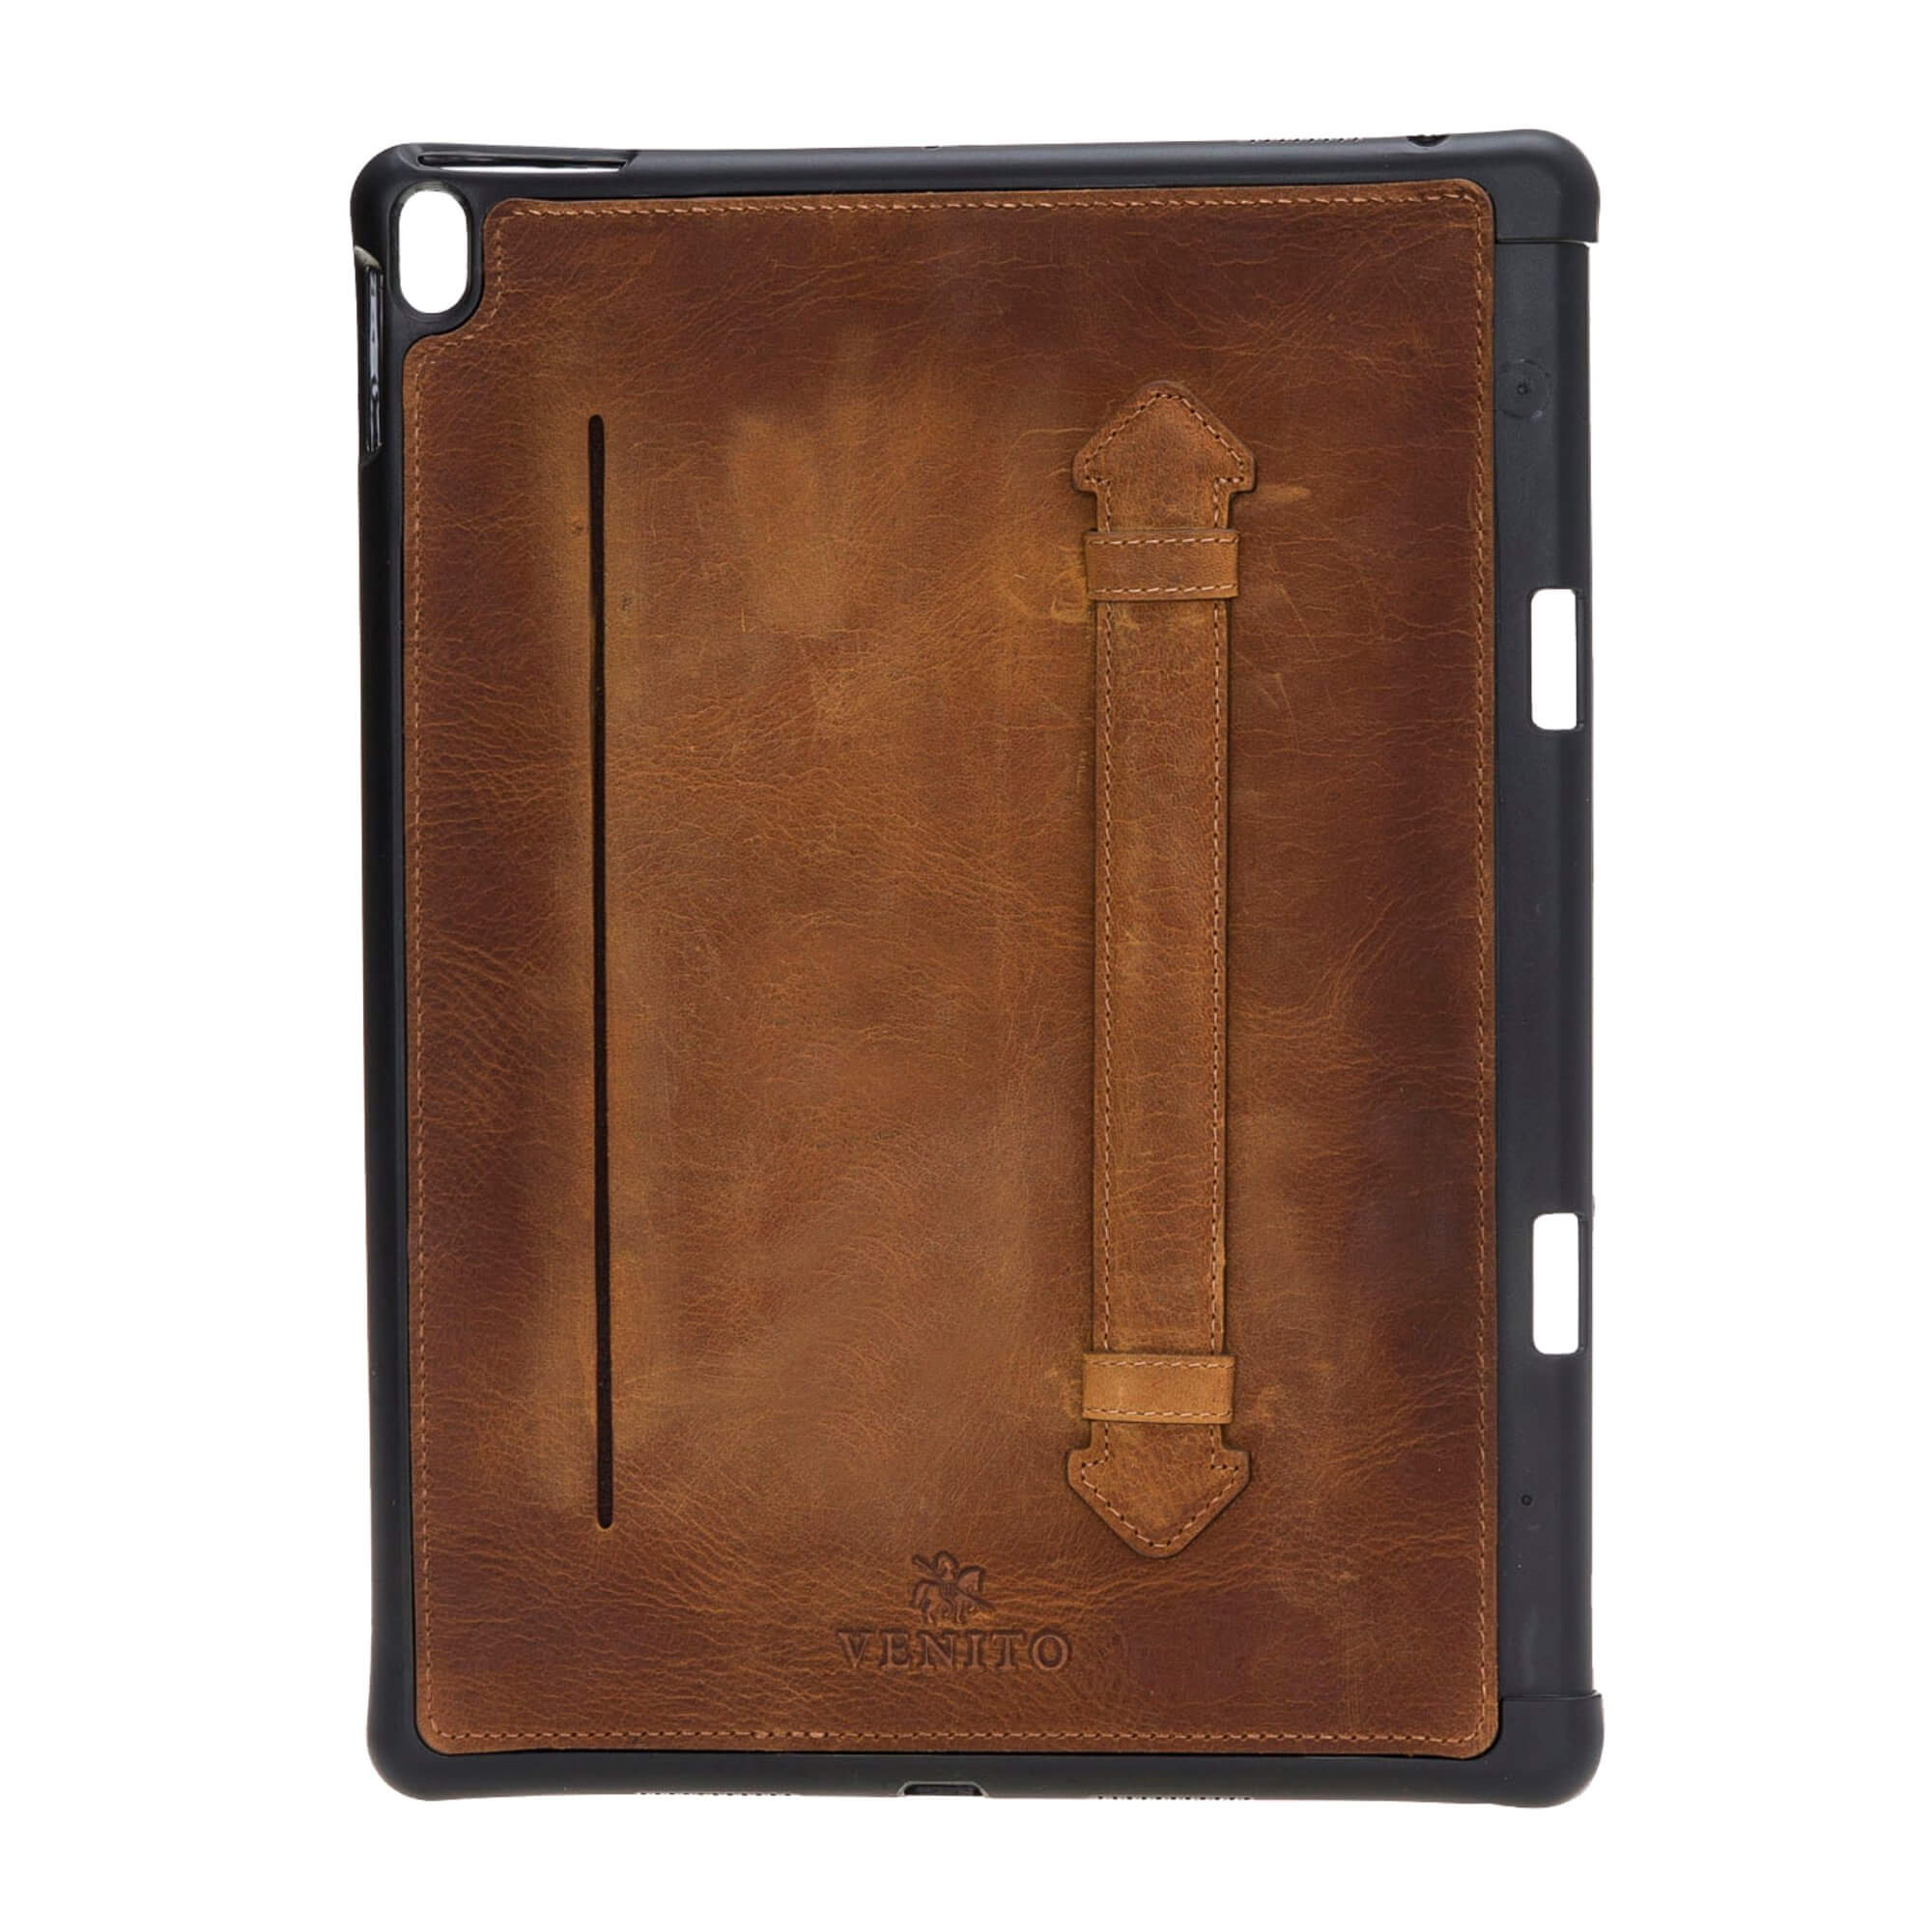 Fleur de Lis iPad mini 3 case,leather iPad air wallet,iPad 4 smart